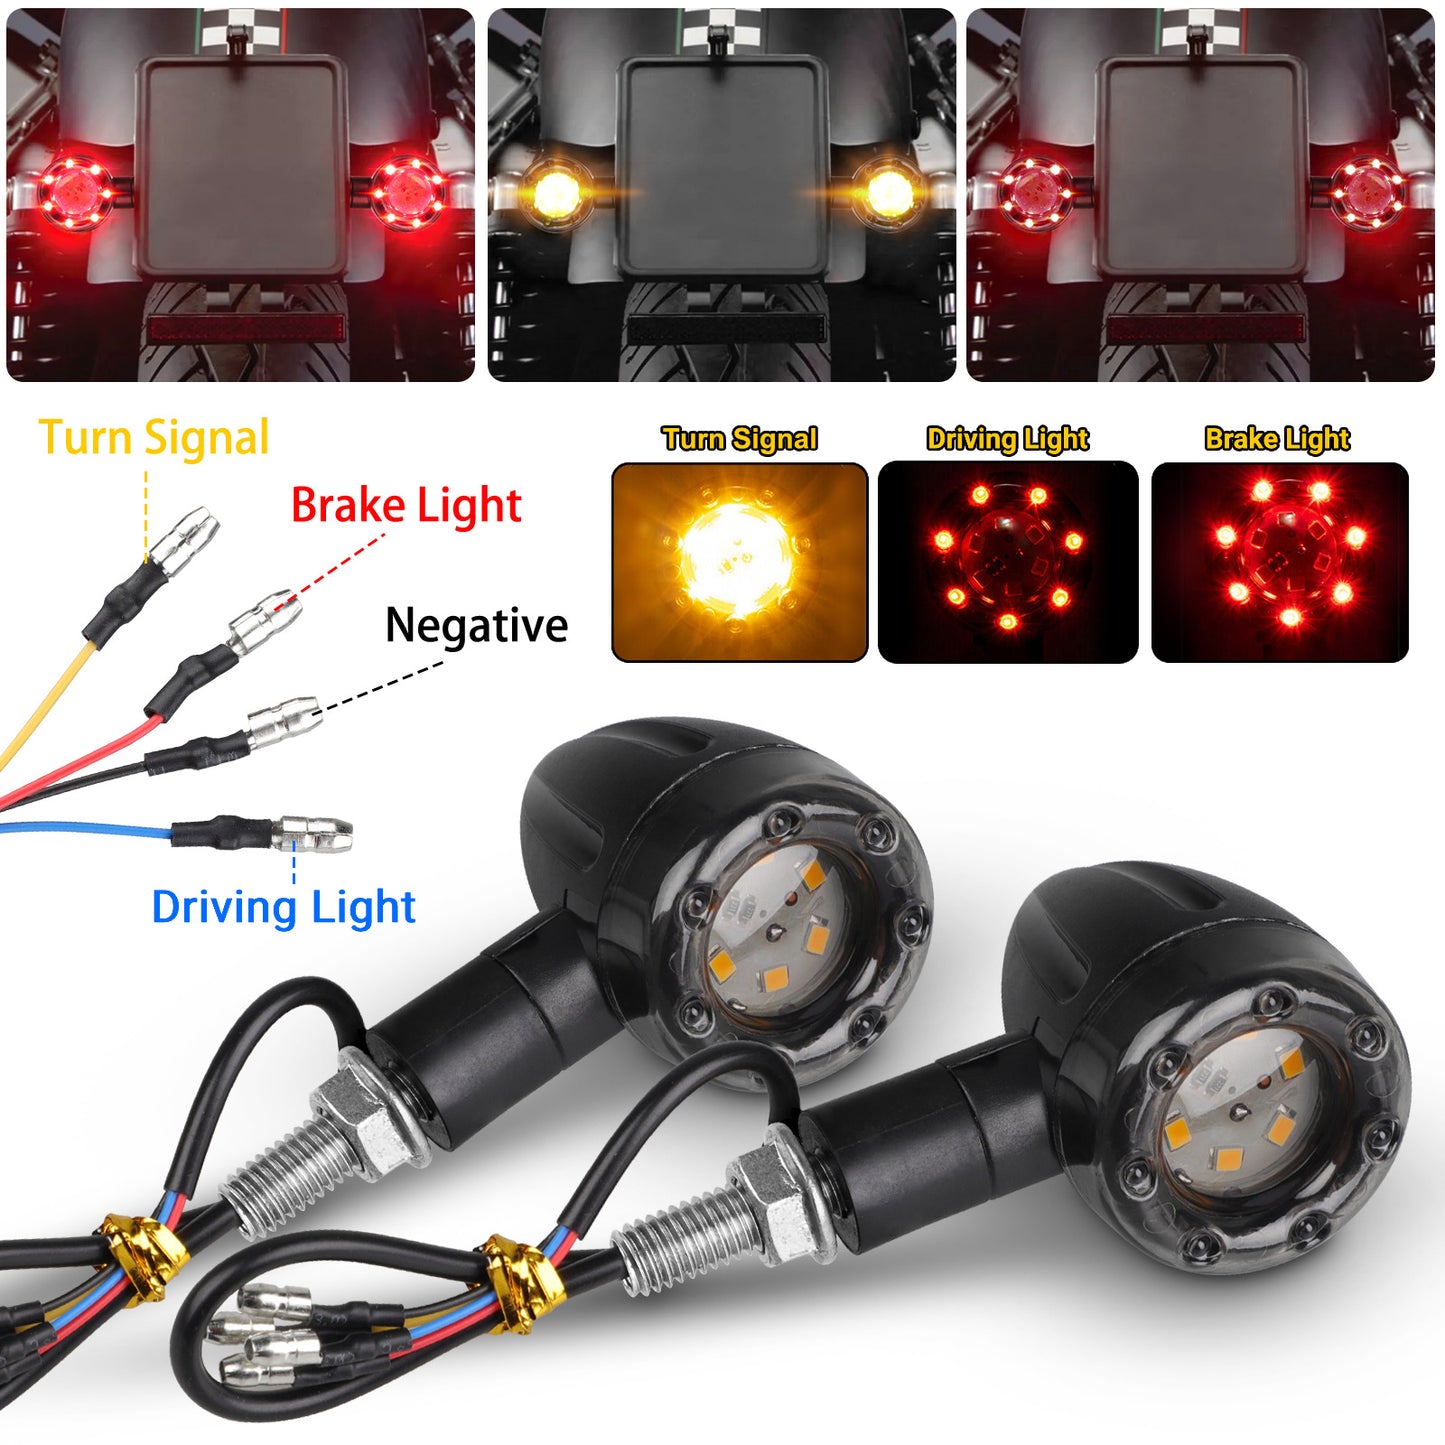 4Pcs Universal Motorcycle LED Turn Signals Blinker Light - Rear Turn Signal Brake Lights Indicator,Motorcycle Bike LED Stop Light Blinker Light Indicator Bulbs